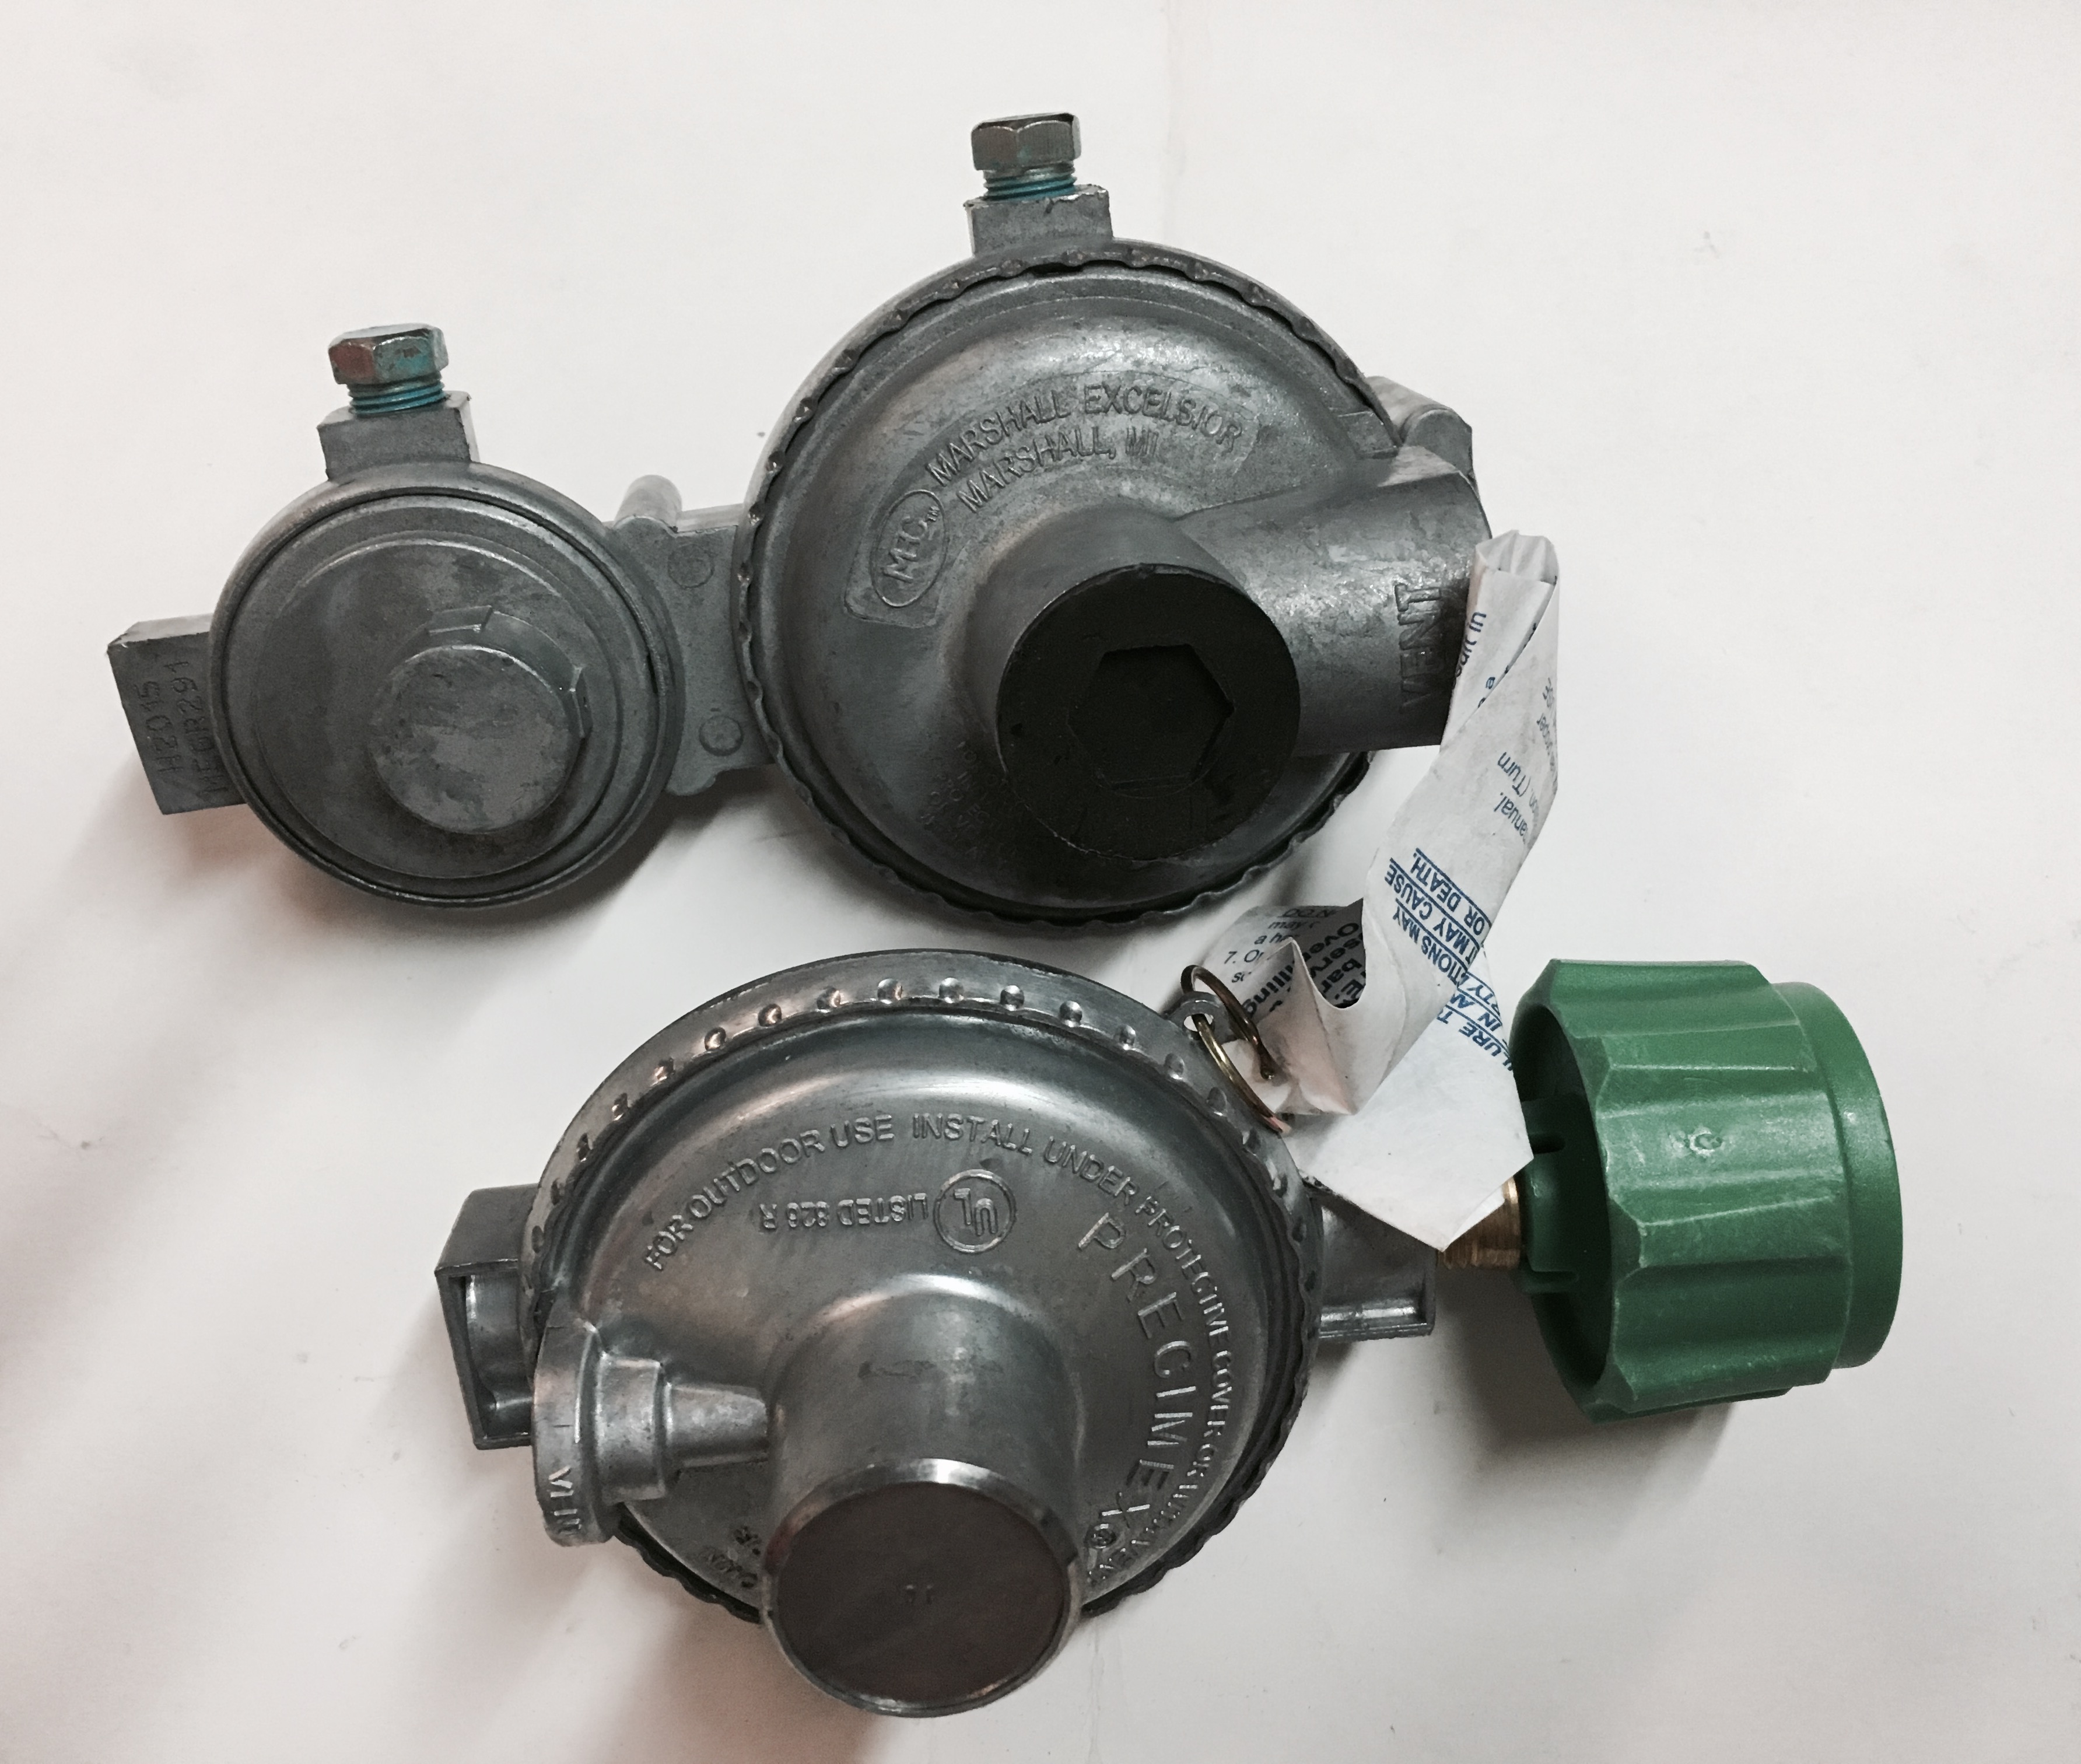 Adjustable Low Pressure Control Valve Propane Gas Regulator Replacement Parts 1x